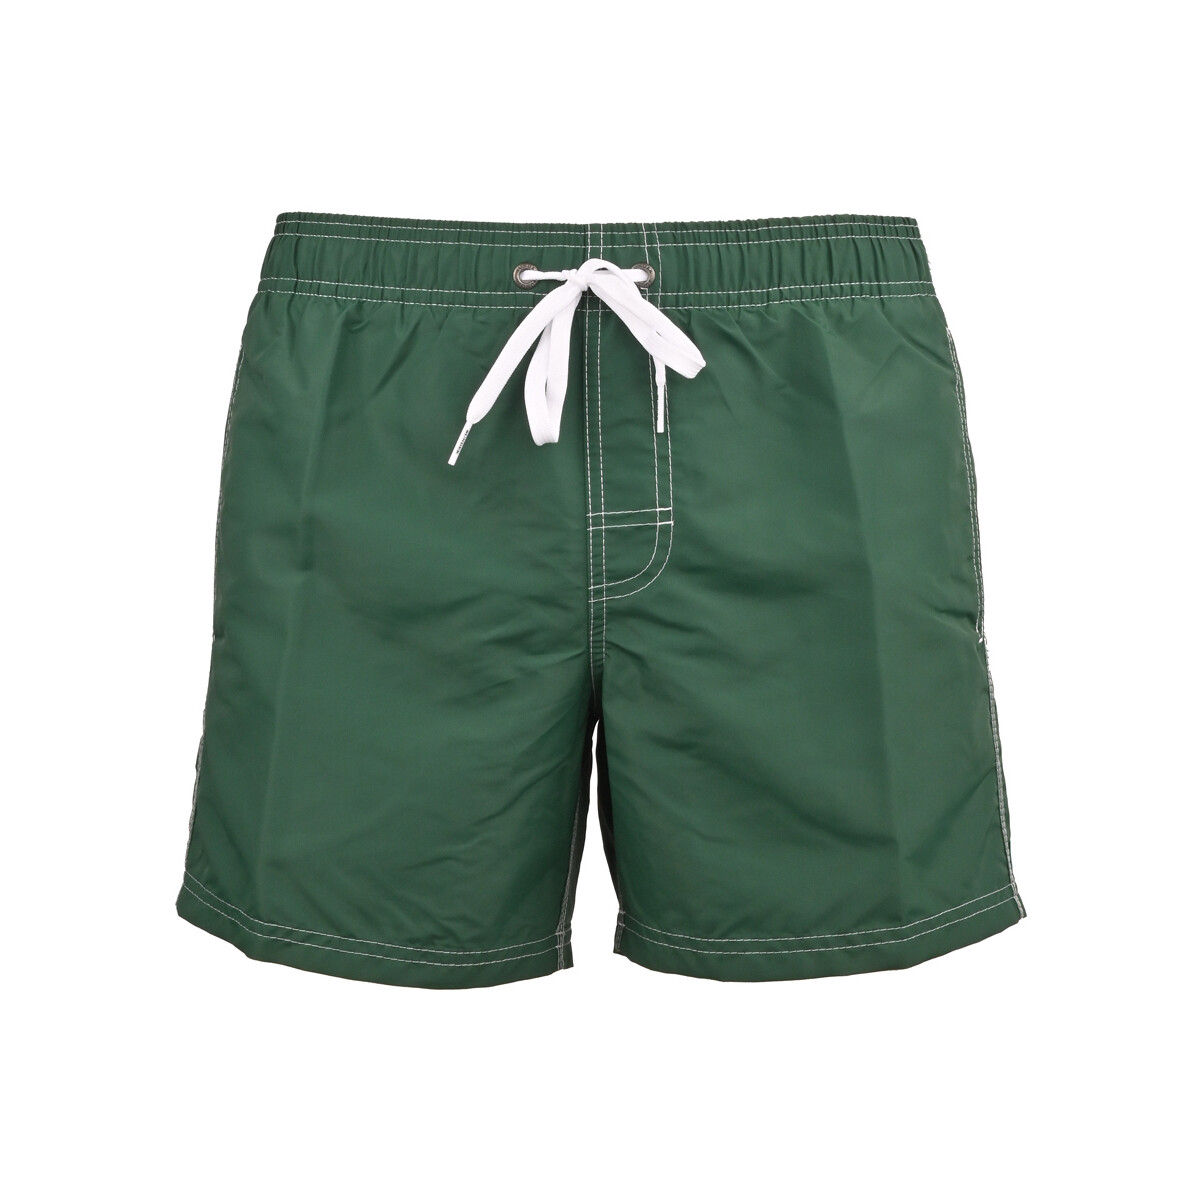 Vêtements Homme Maillots / Shorts de bain Sundek m504bdta100-45703 Vert